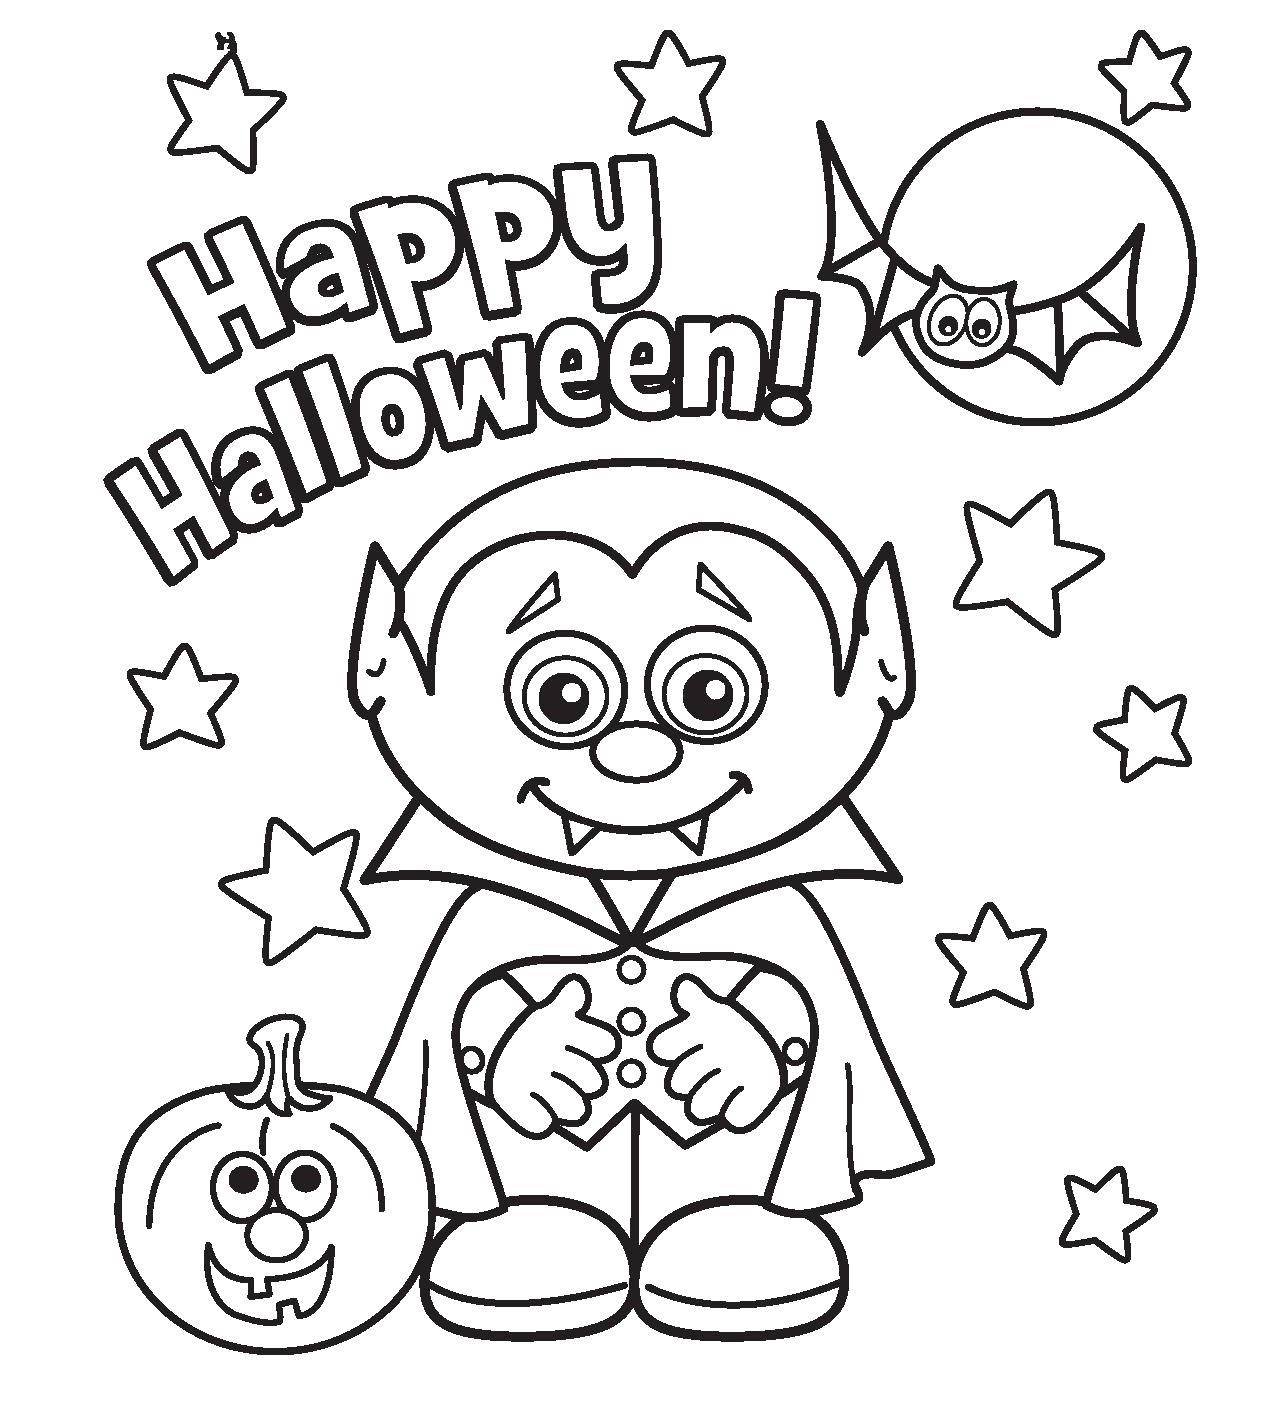 Coloring Halloween. Category Halloween. Tags:  Halloween, night, pumpkin, Vampir.